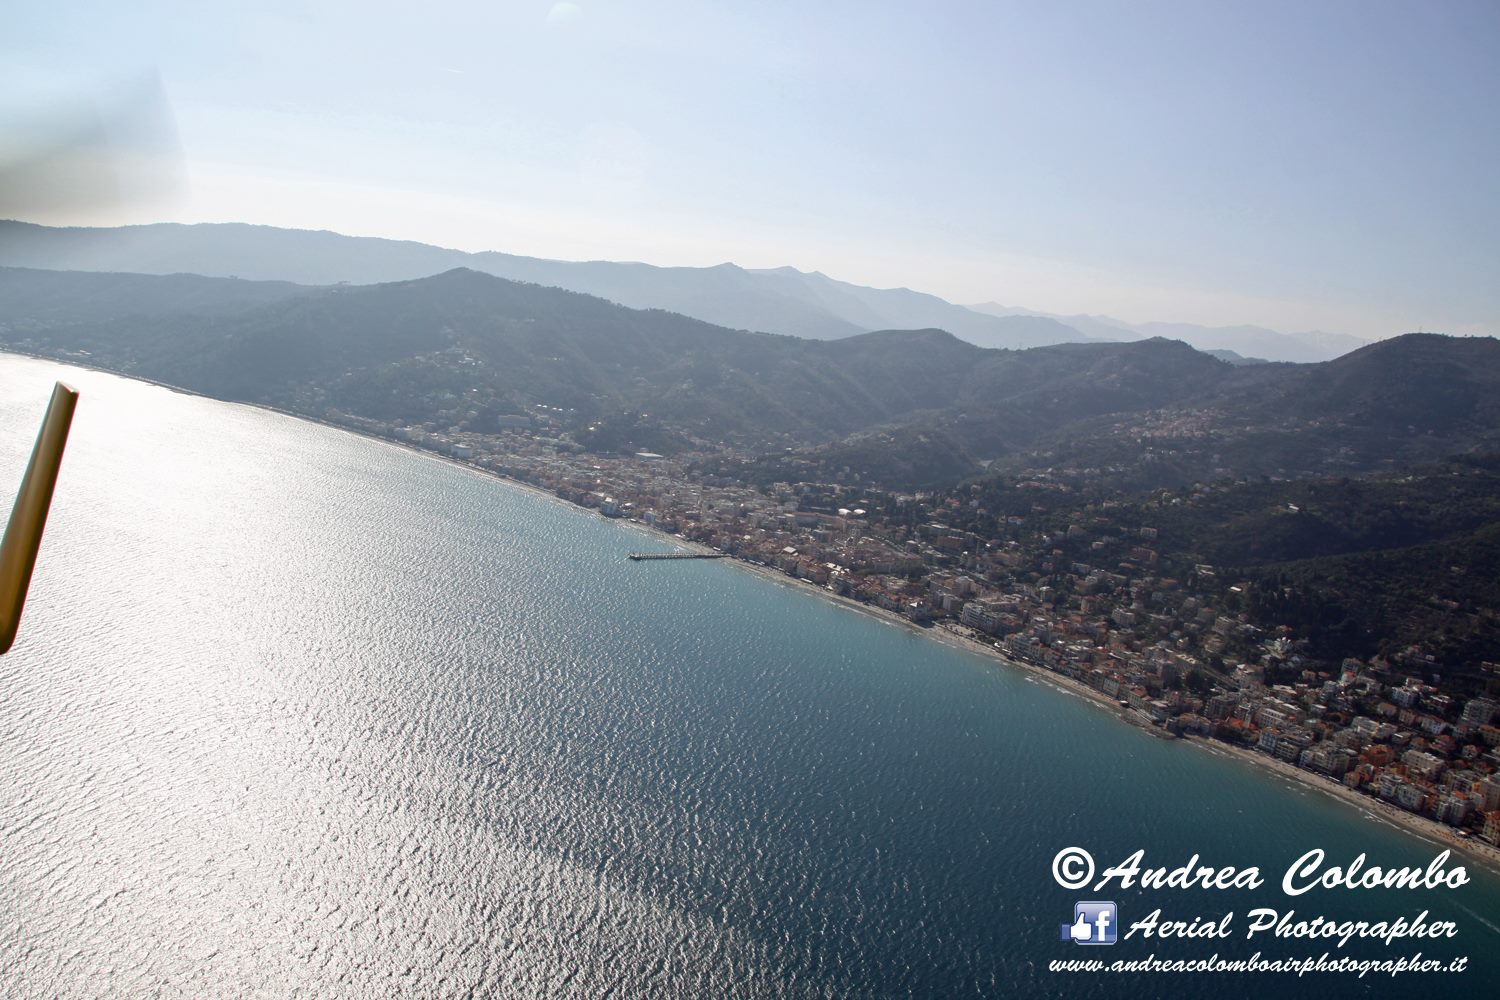 In flight over Ponente Coast of (Liguria)